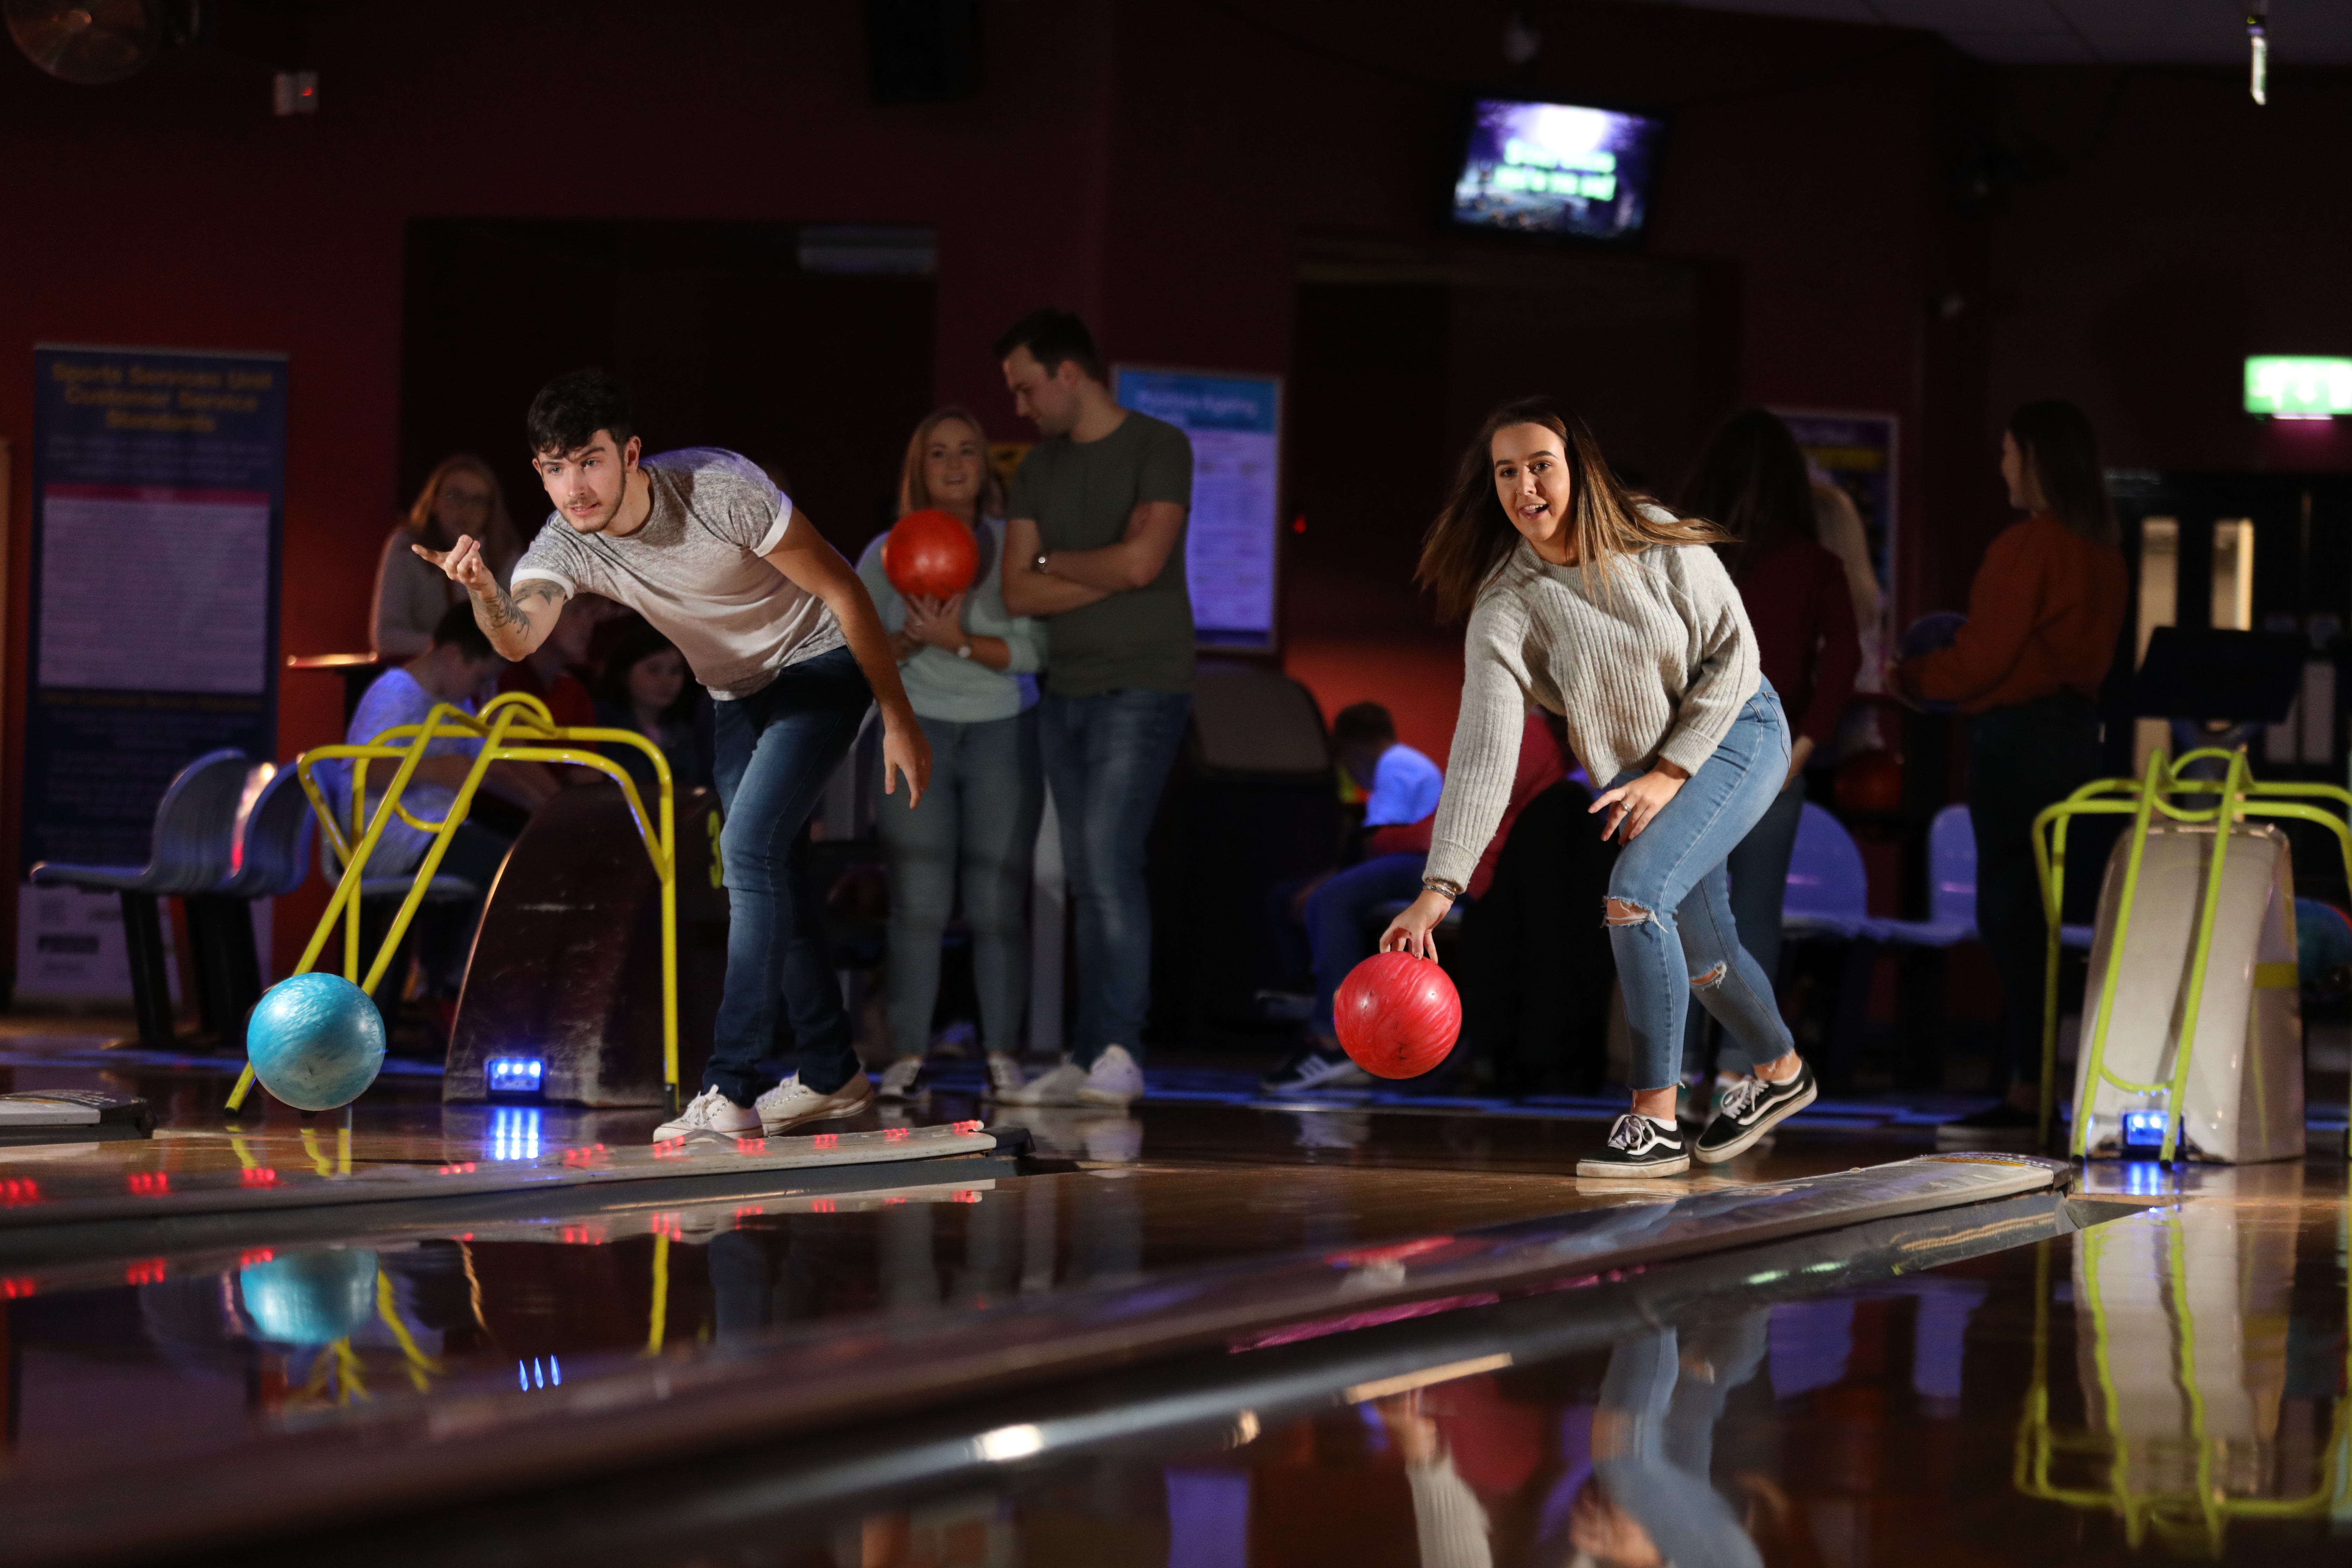 Two people bowling at dimly lit tenpin bowling alley 